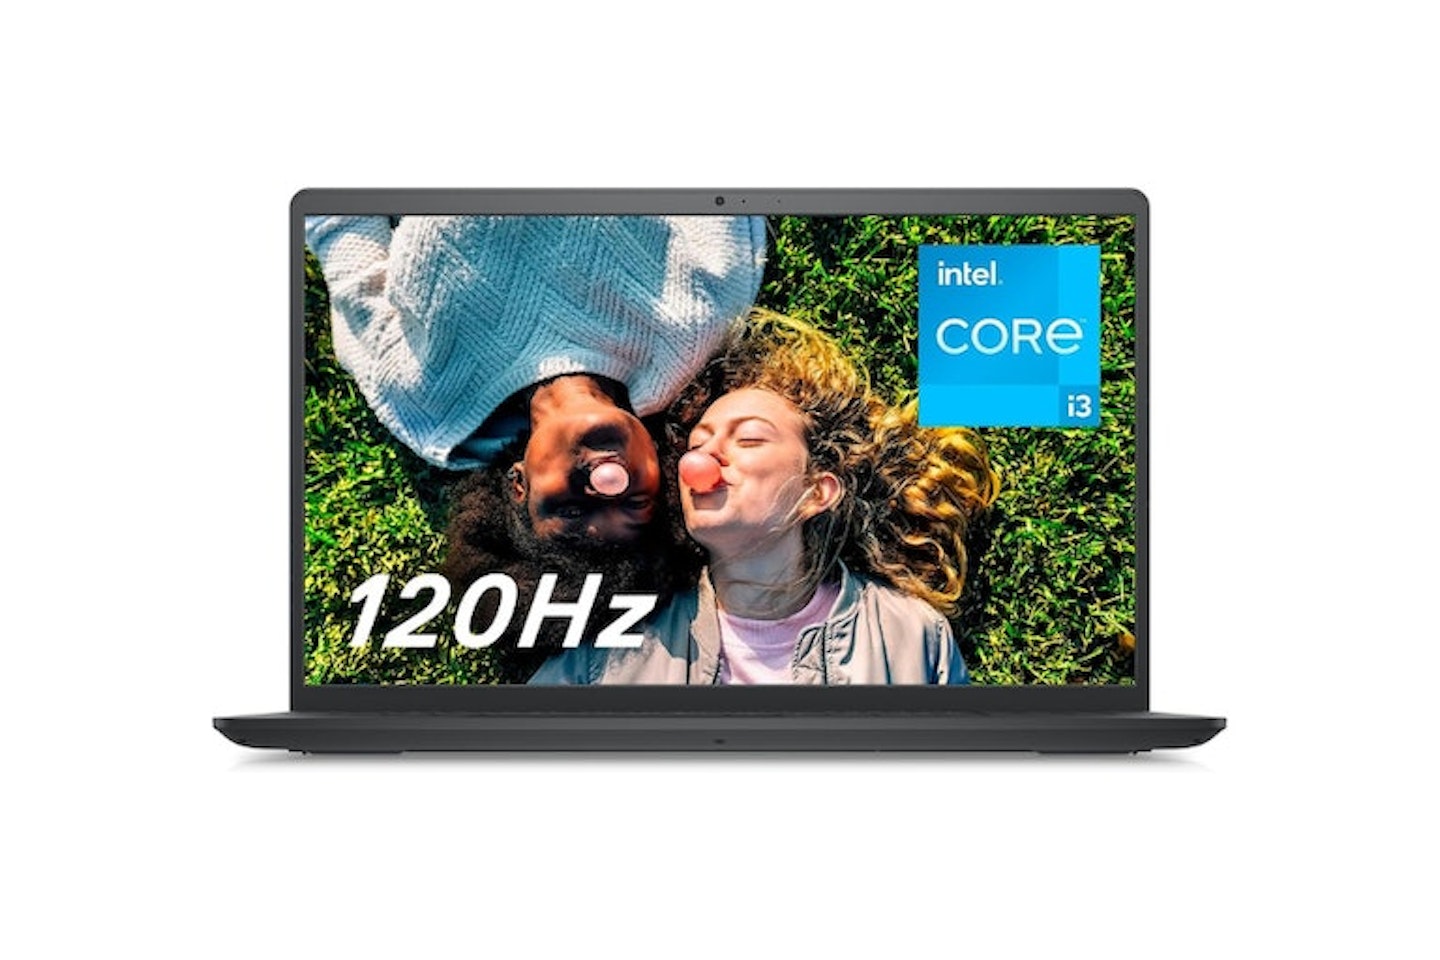 Dell Inspiron 15 3520 Laptop